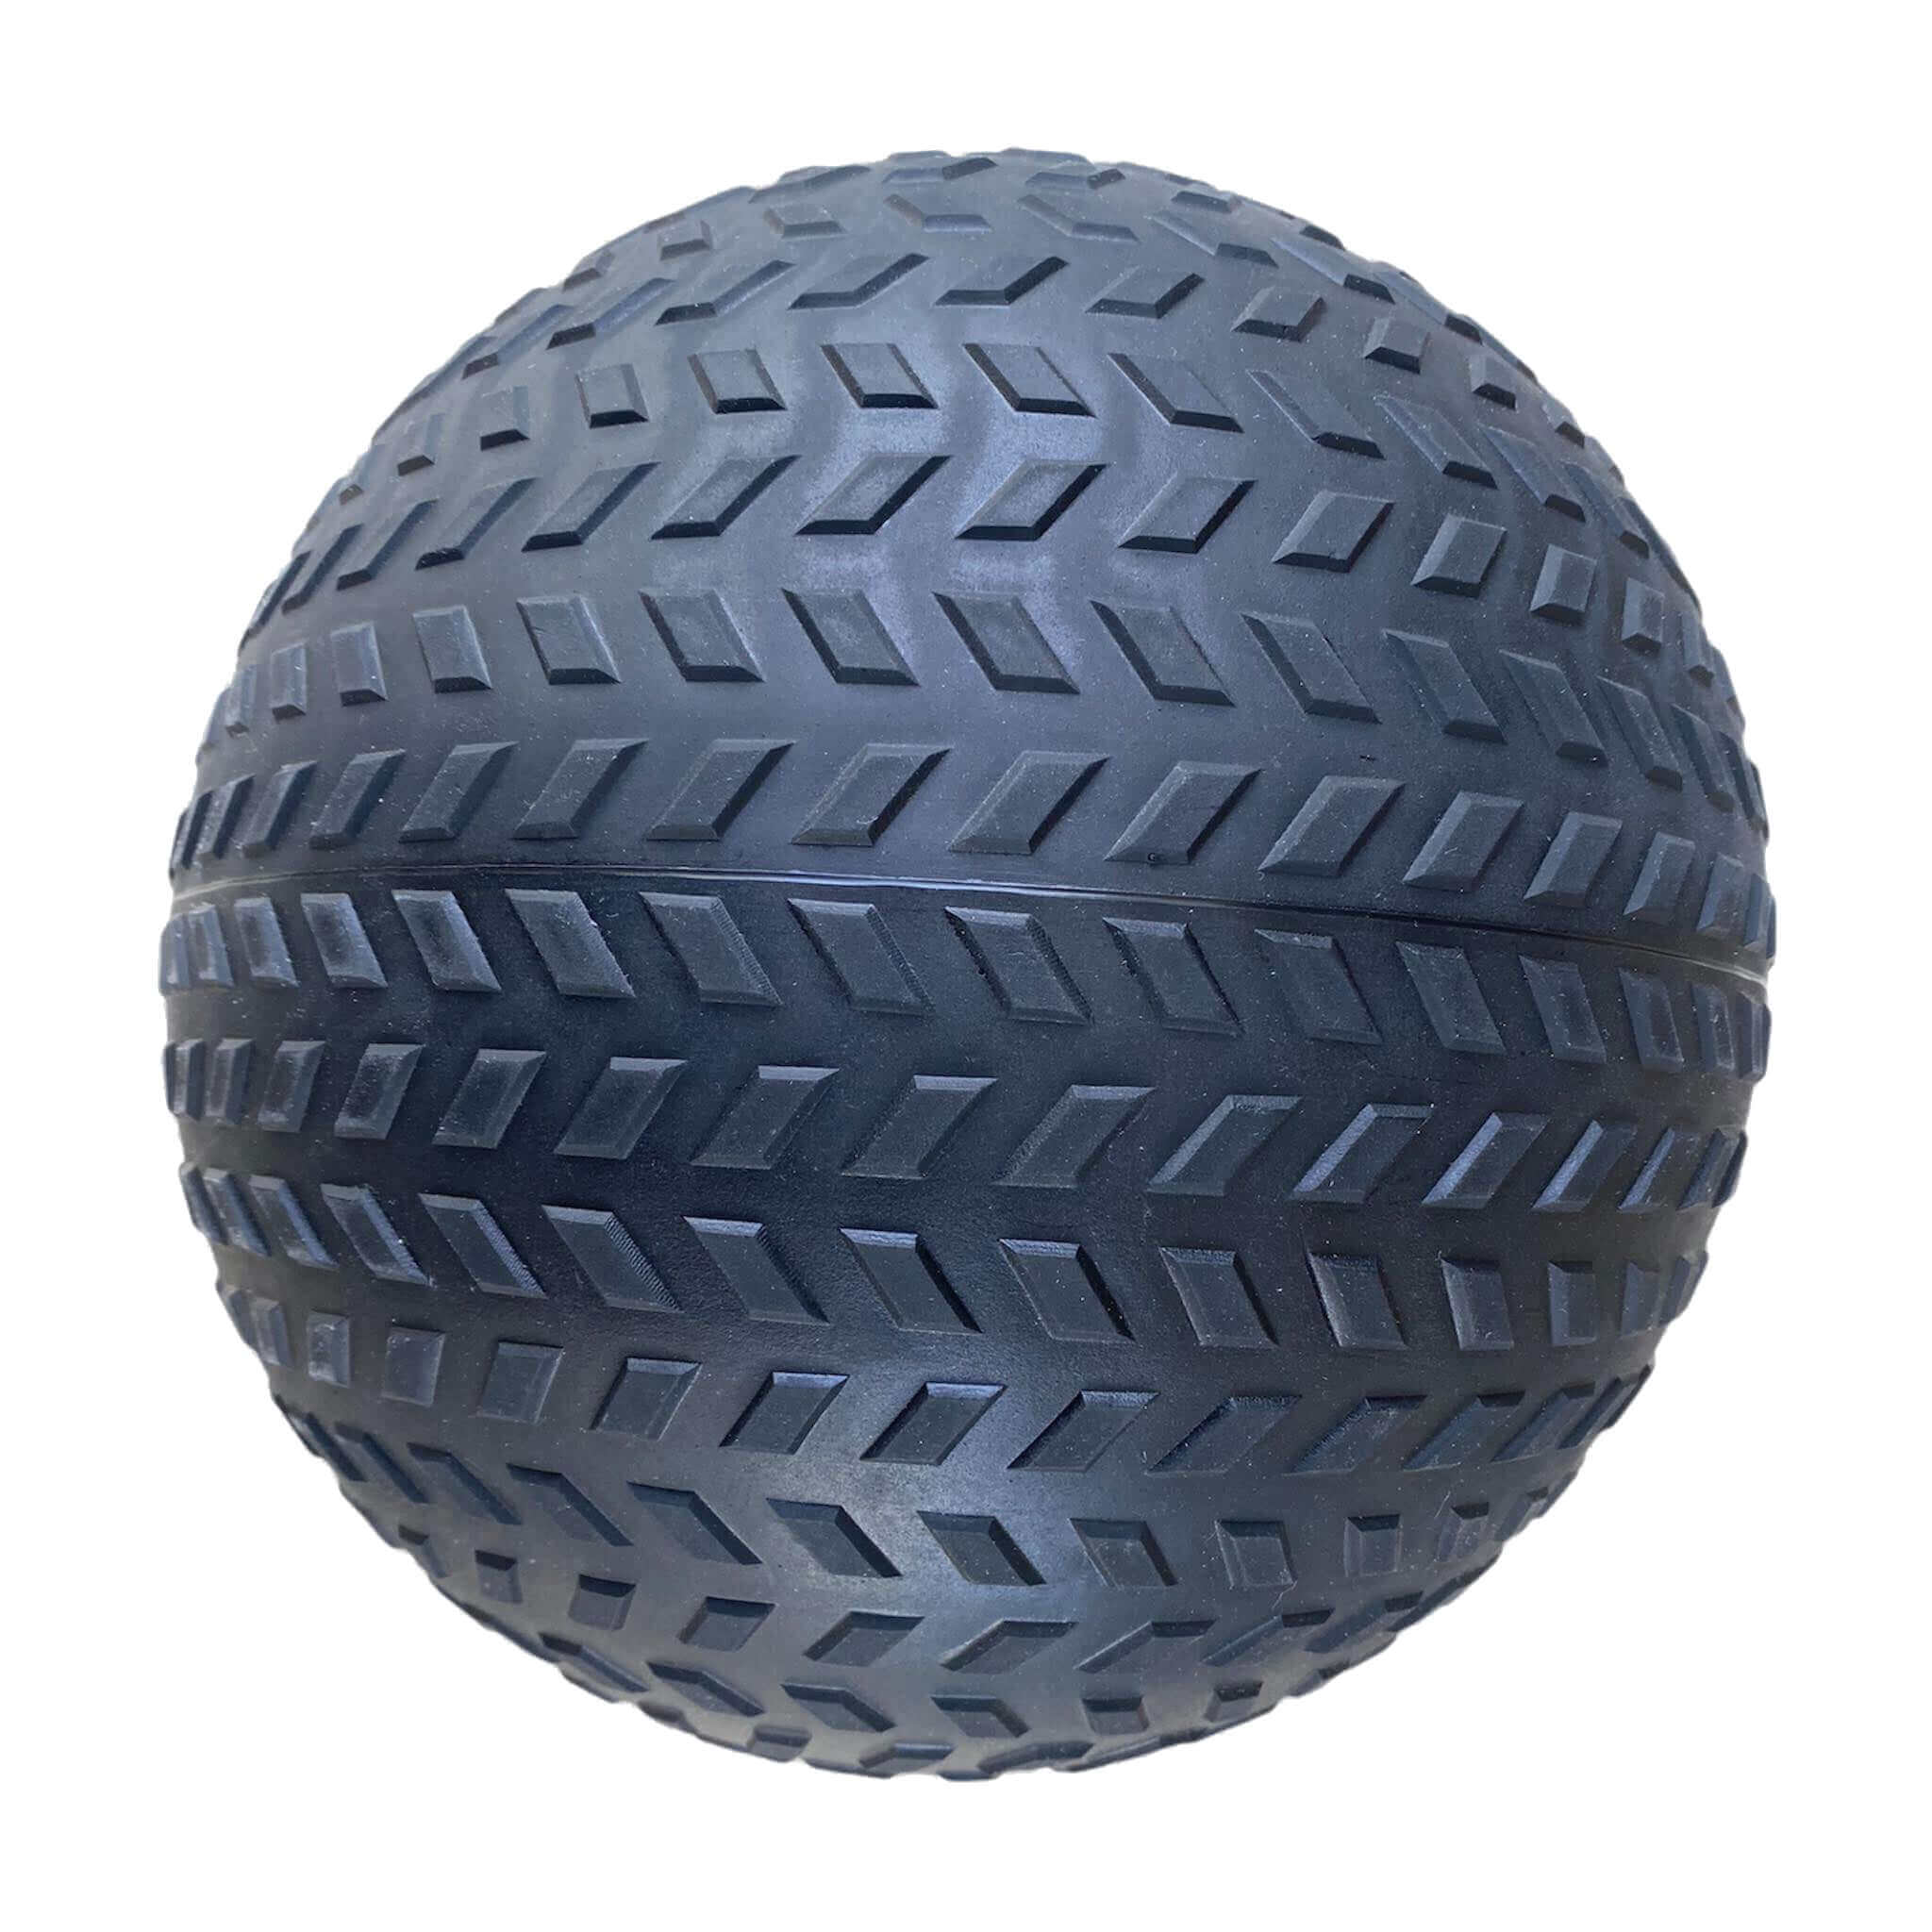 12kg Tyre Thread Slam Balls Fitness Exercise Sand Bag | INSOURCE